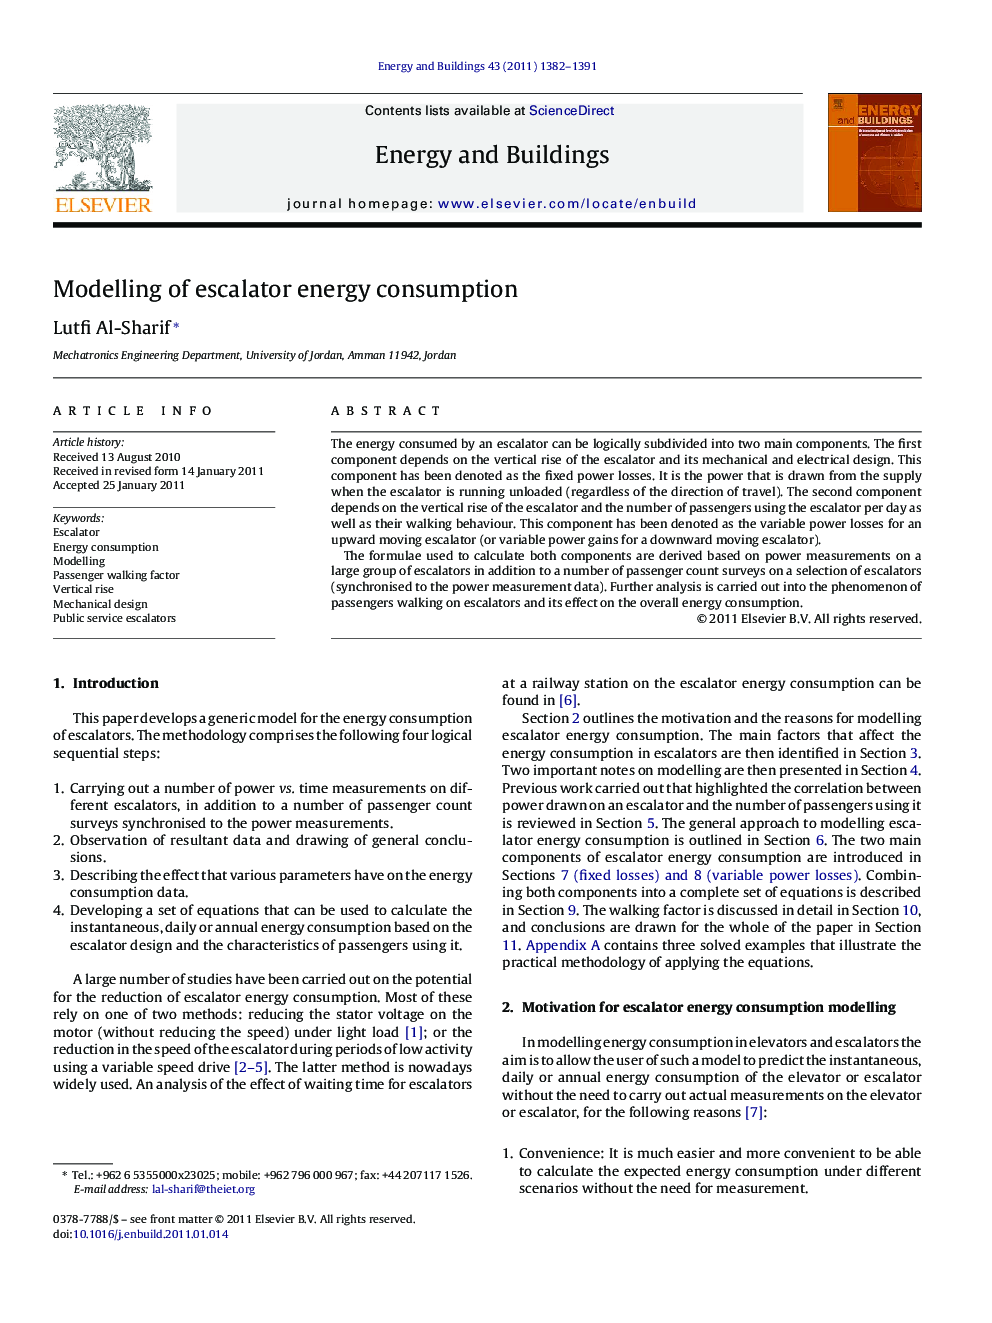 Modelling of escalator energy consumption